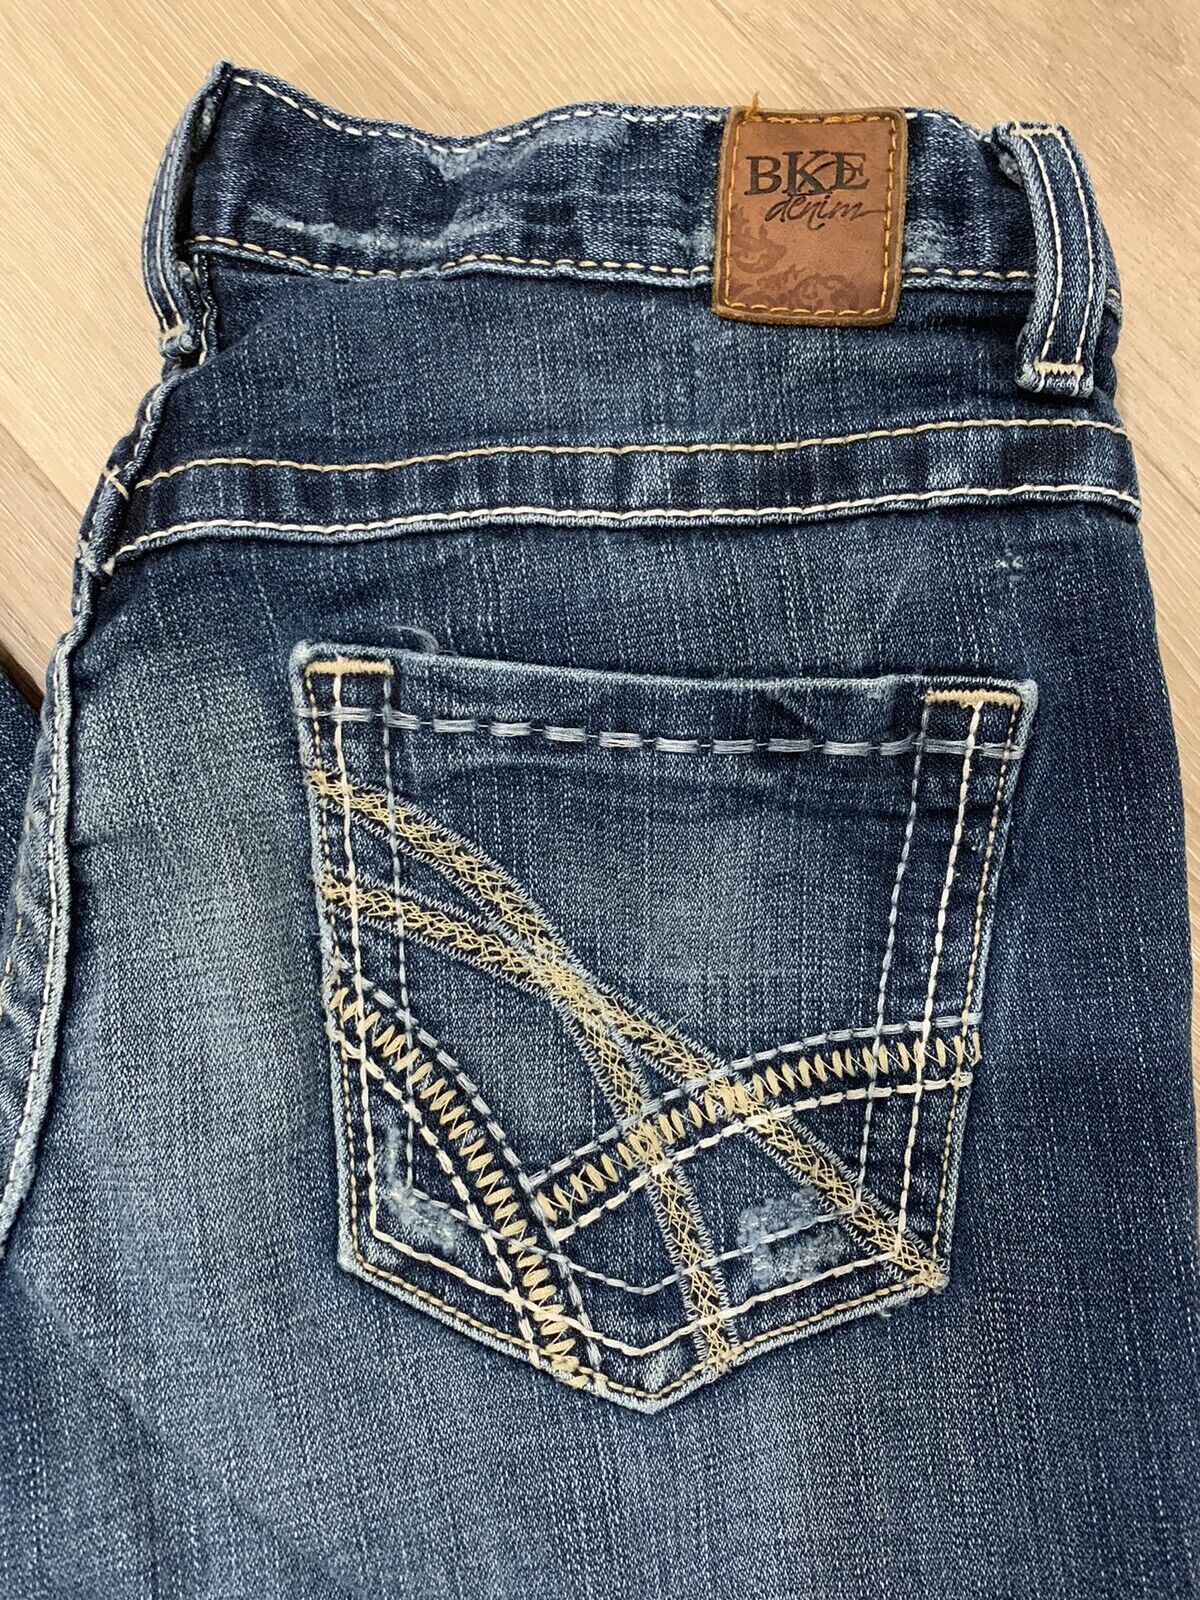 BKE Drew Bootcut Women’s Jeans 28X29.5 ACTUAL SIZ… - image 9